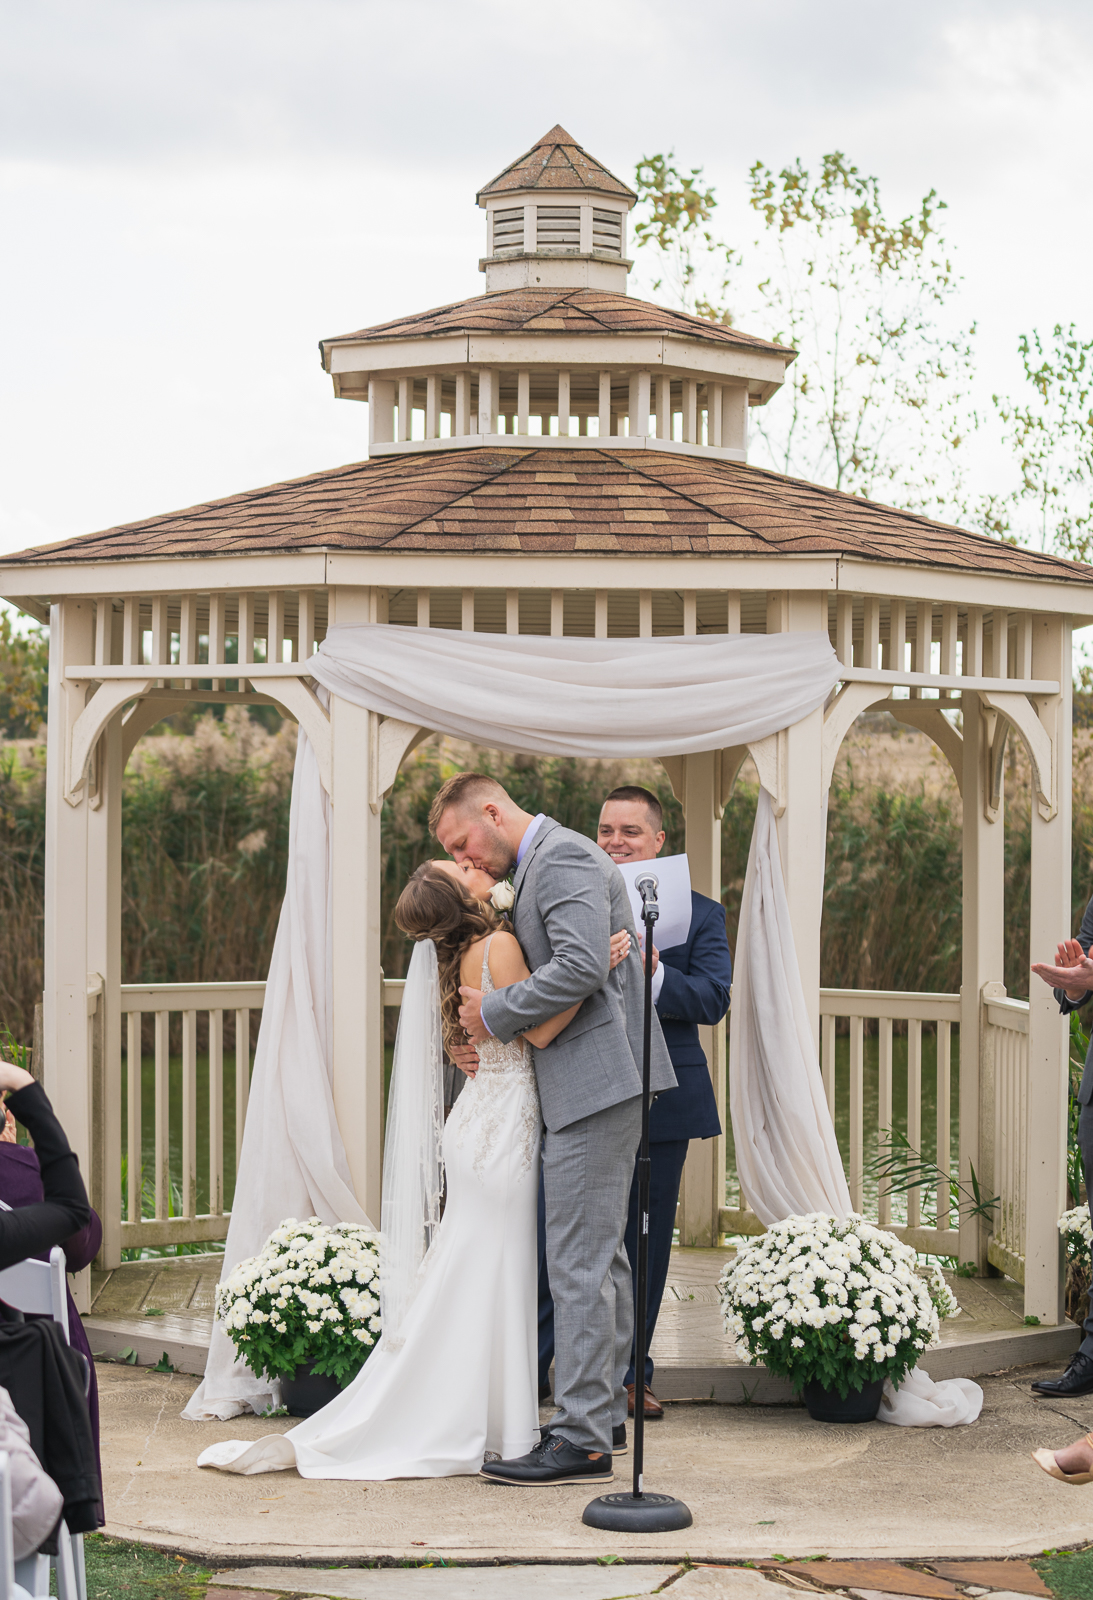 Bride and groom, kiss, gazebo, fall wedding, rustic outdoor wedding ceremony at White Birch Barn